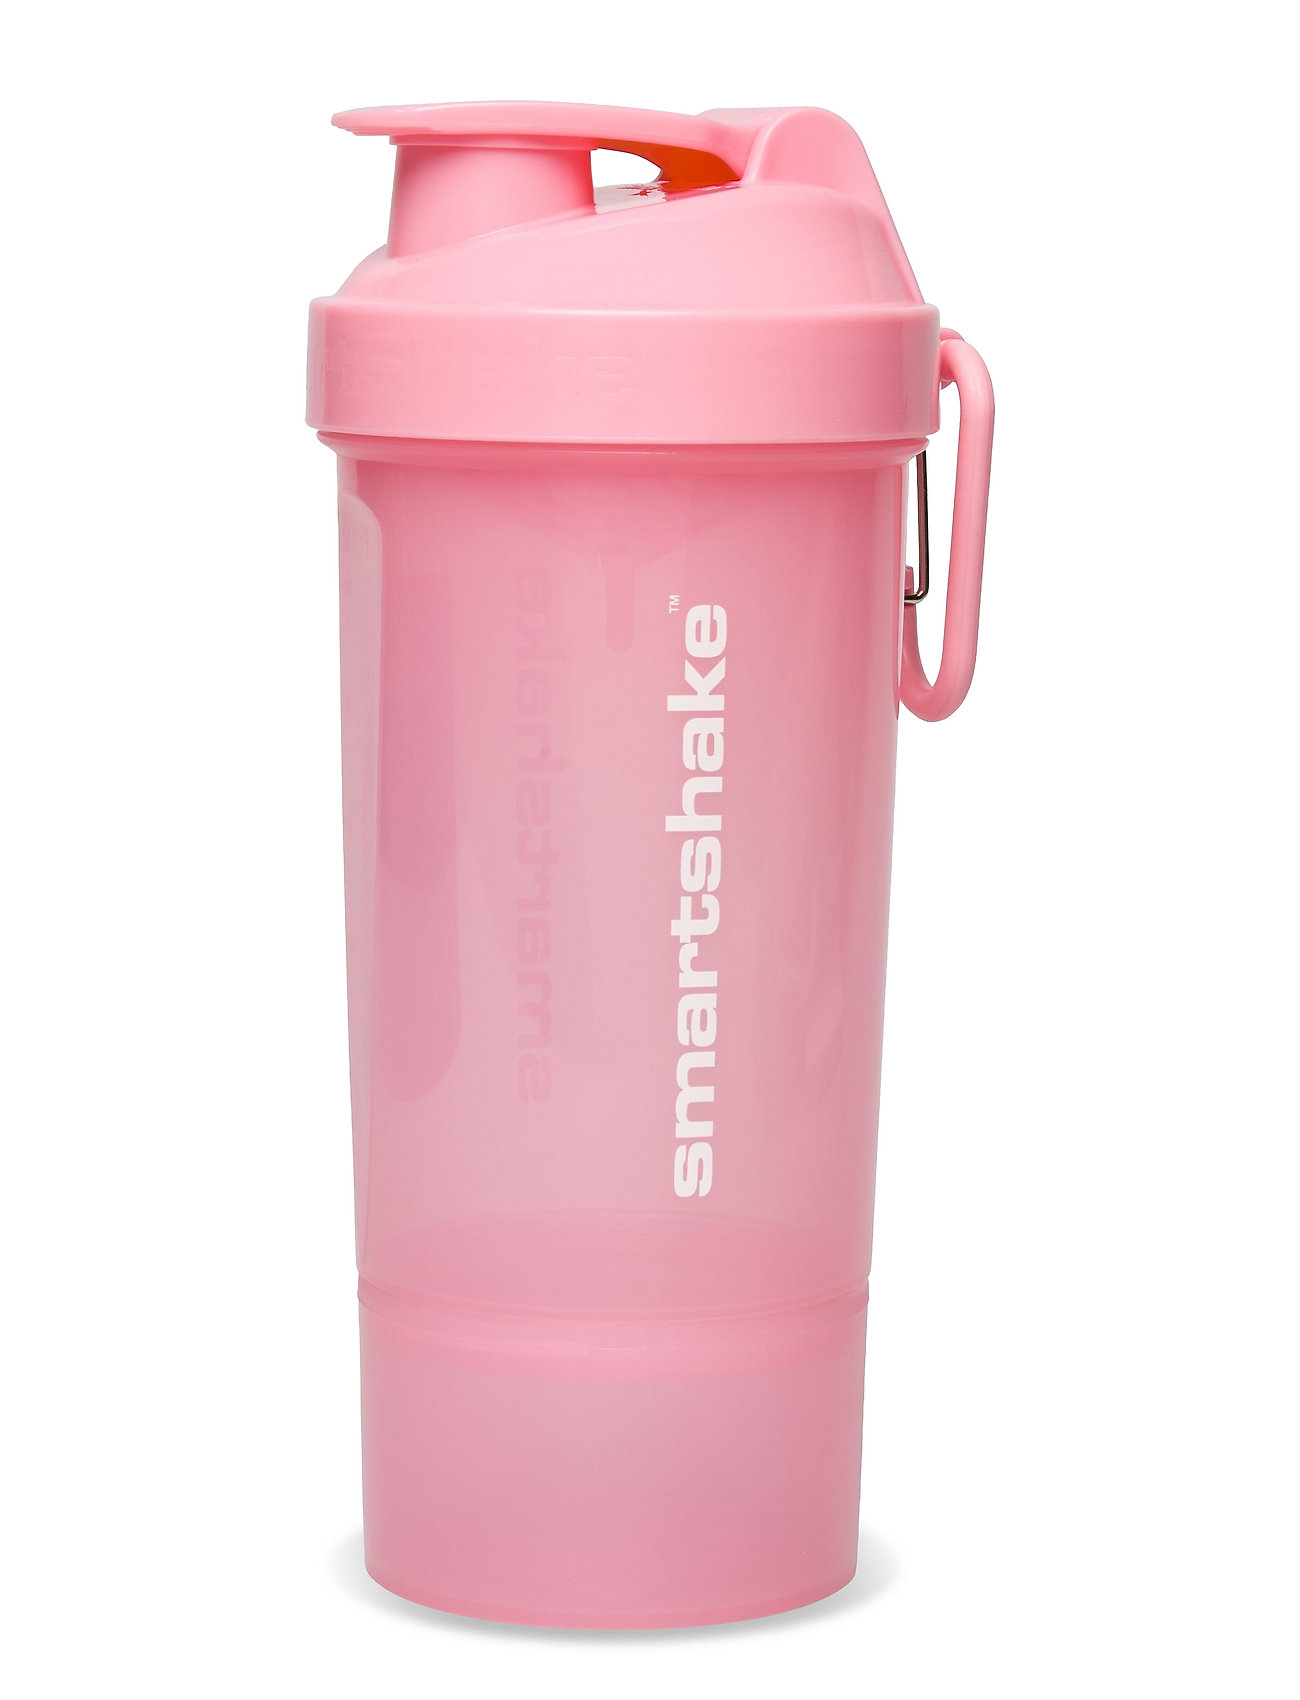 Smatshake Original2go Accessories Water Bottles Vaaleanpunainen Smartshake